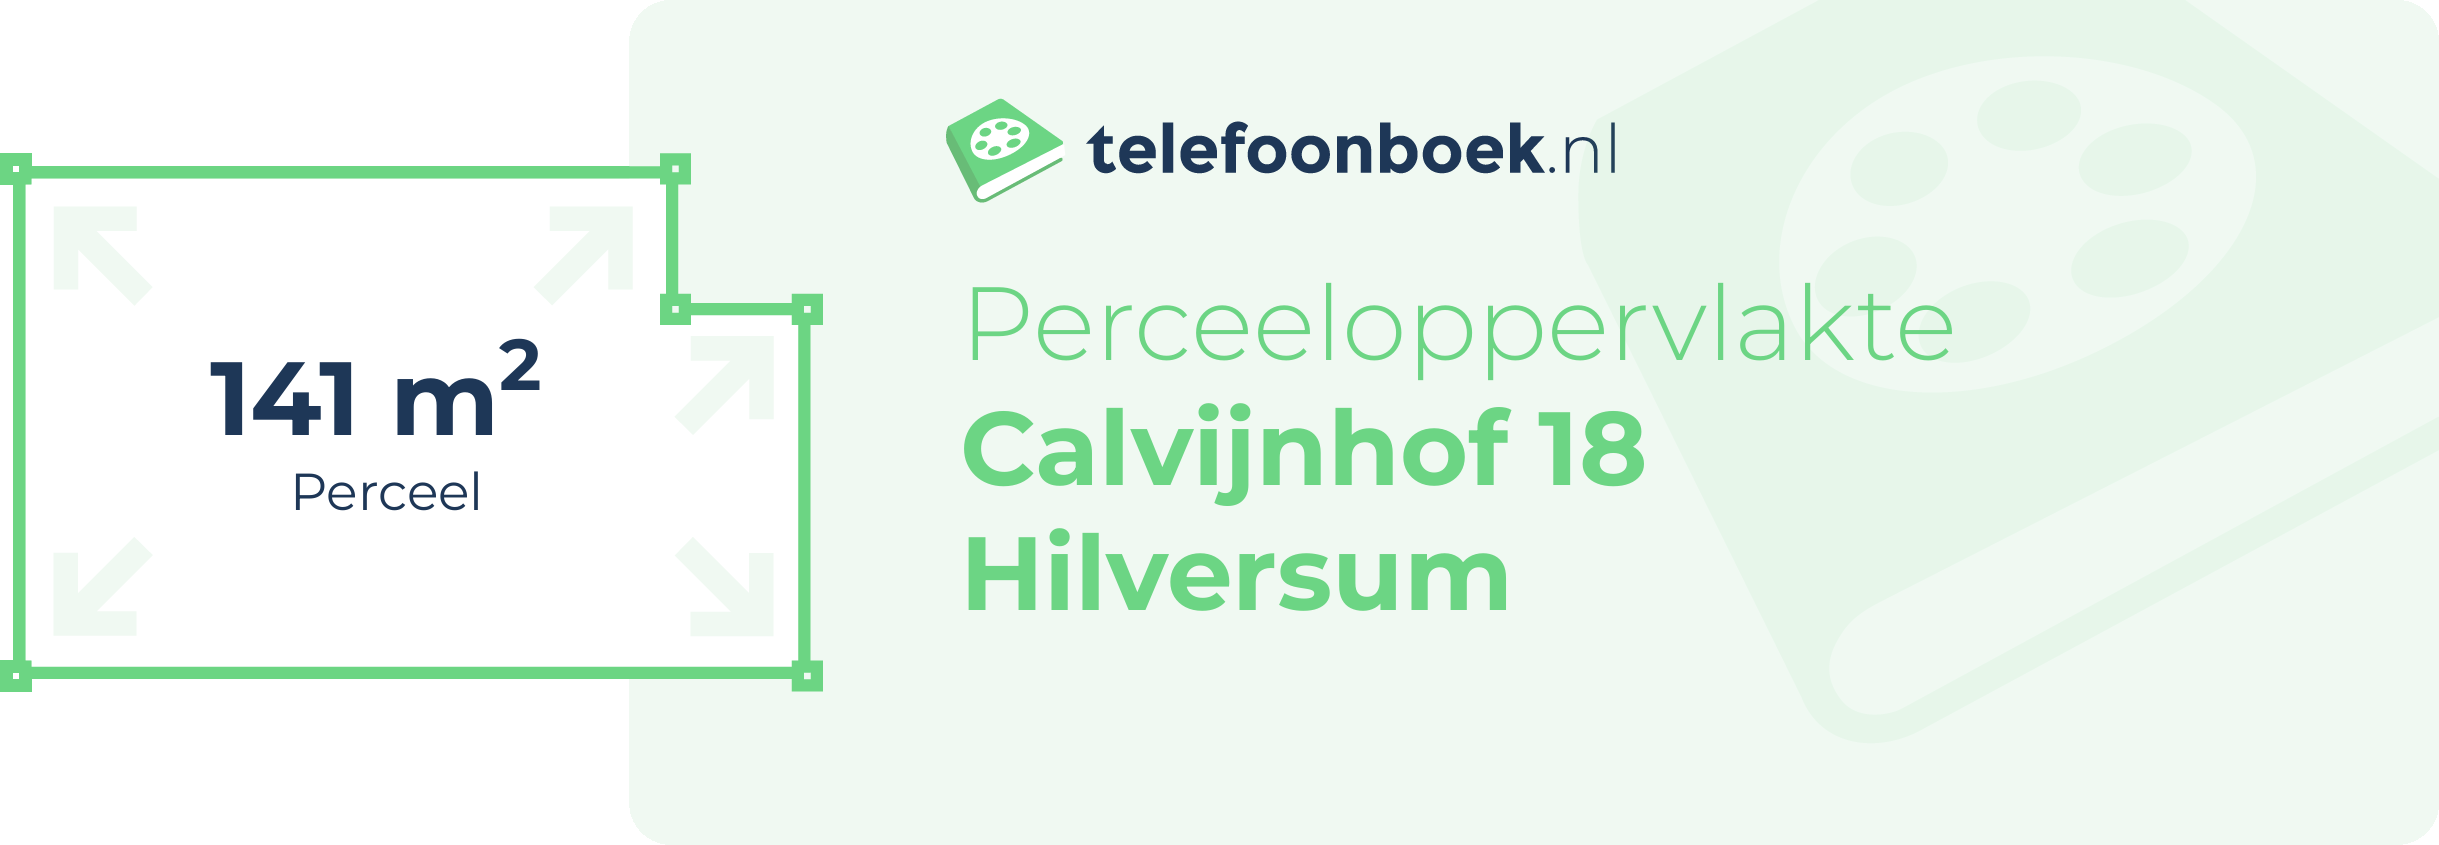 Perceeloppervlakte Calvijnhof 18 Hilversum